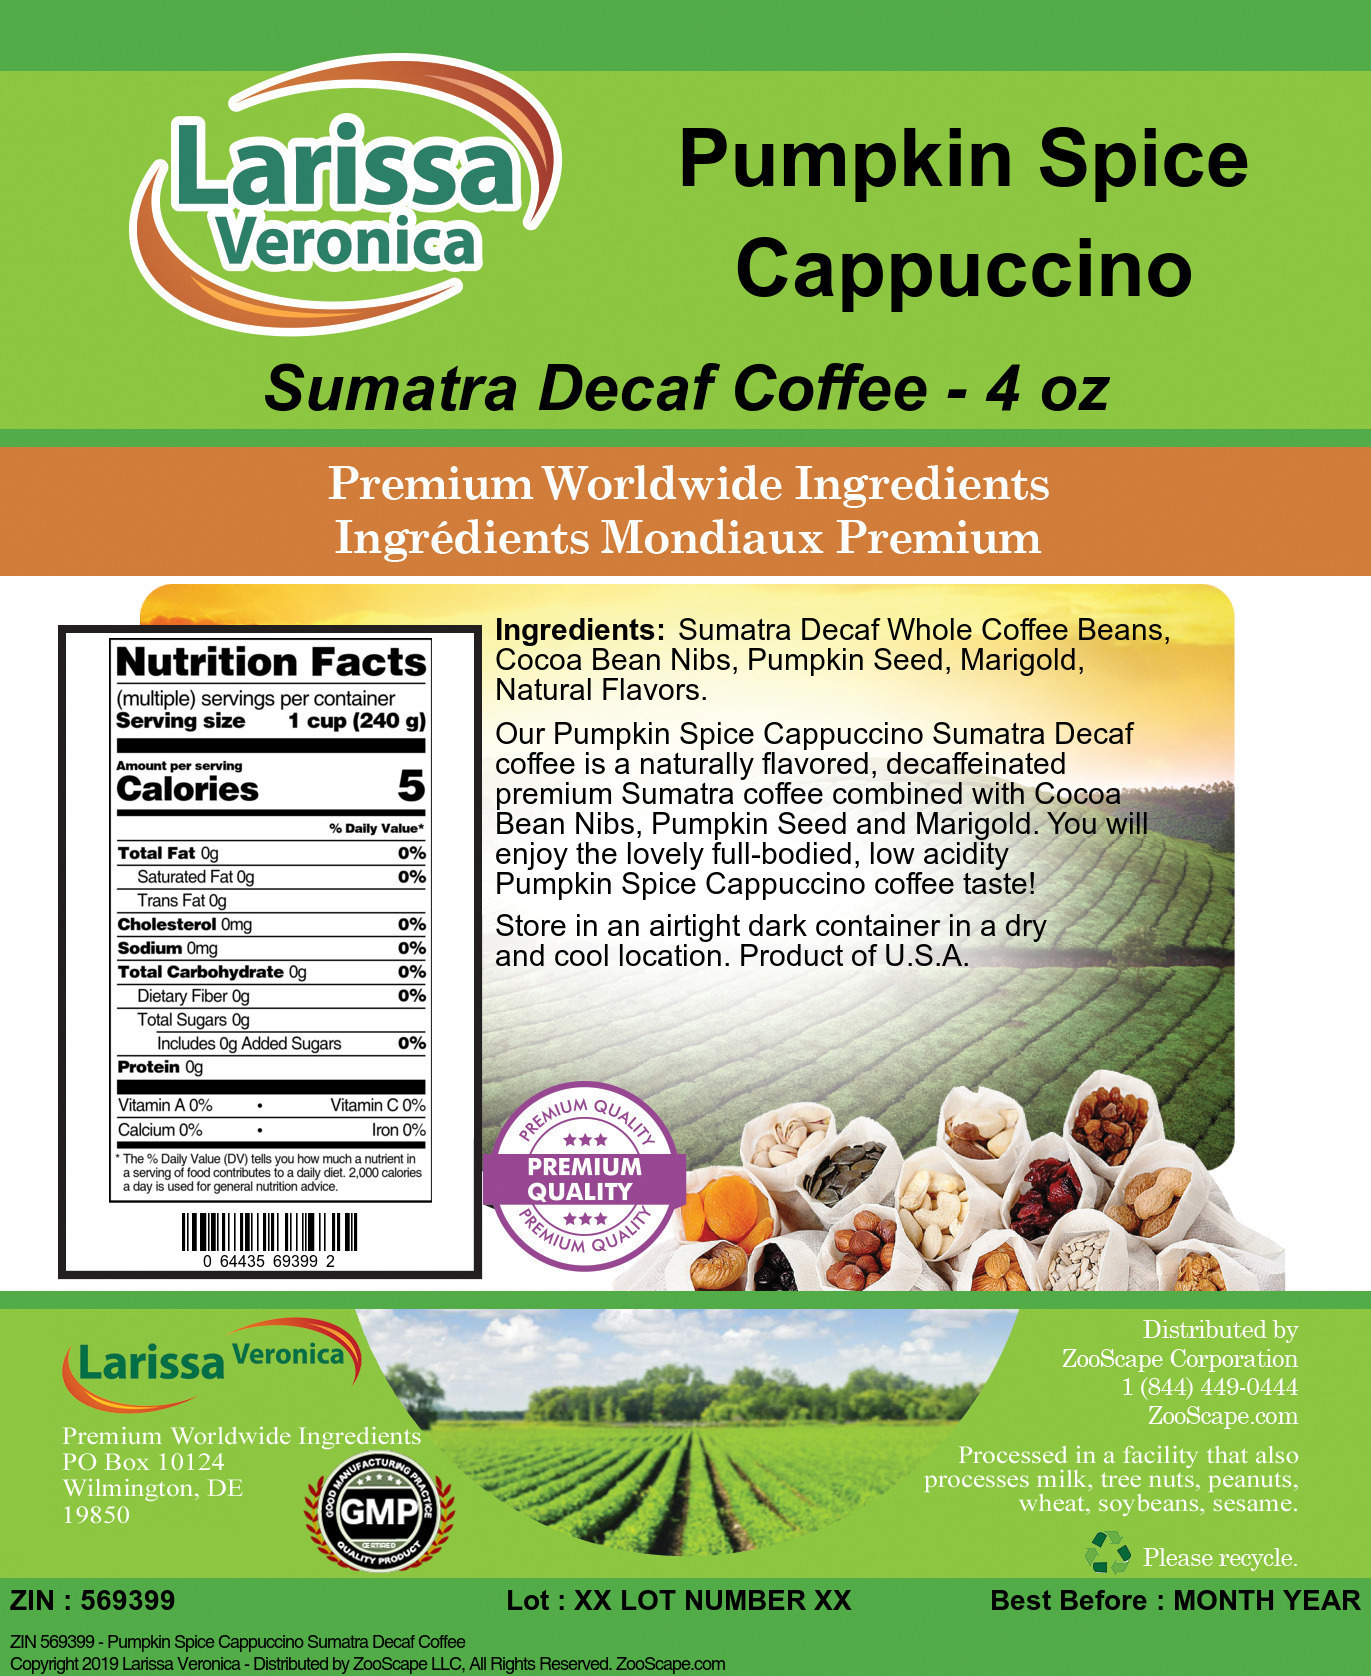 Pumpkin Spice Cappuccino Sumatra Decaf Coffee - Label